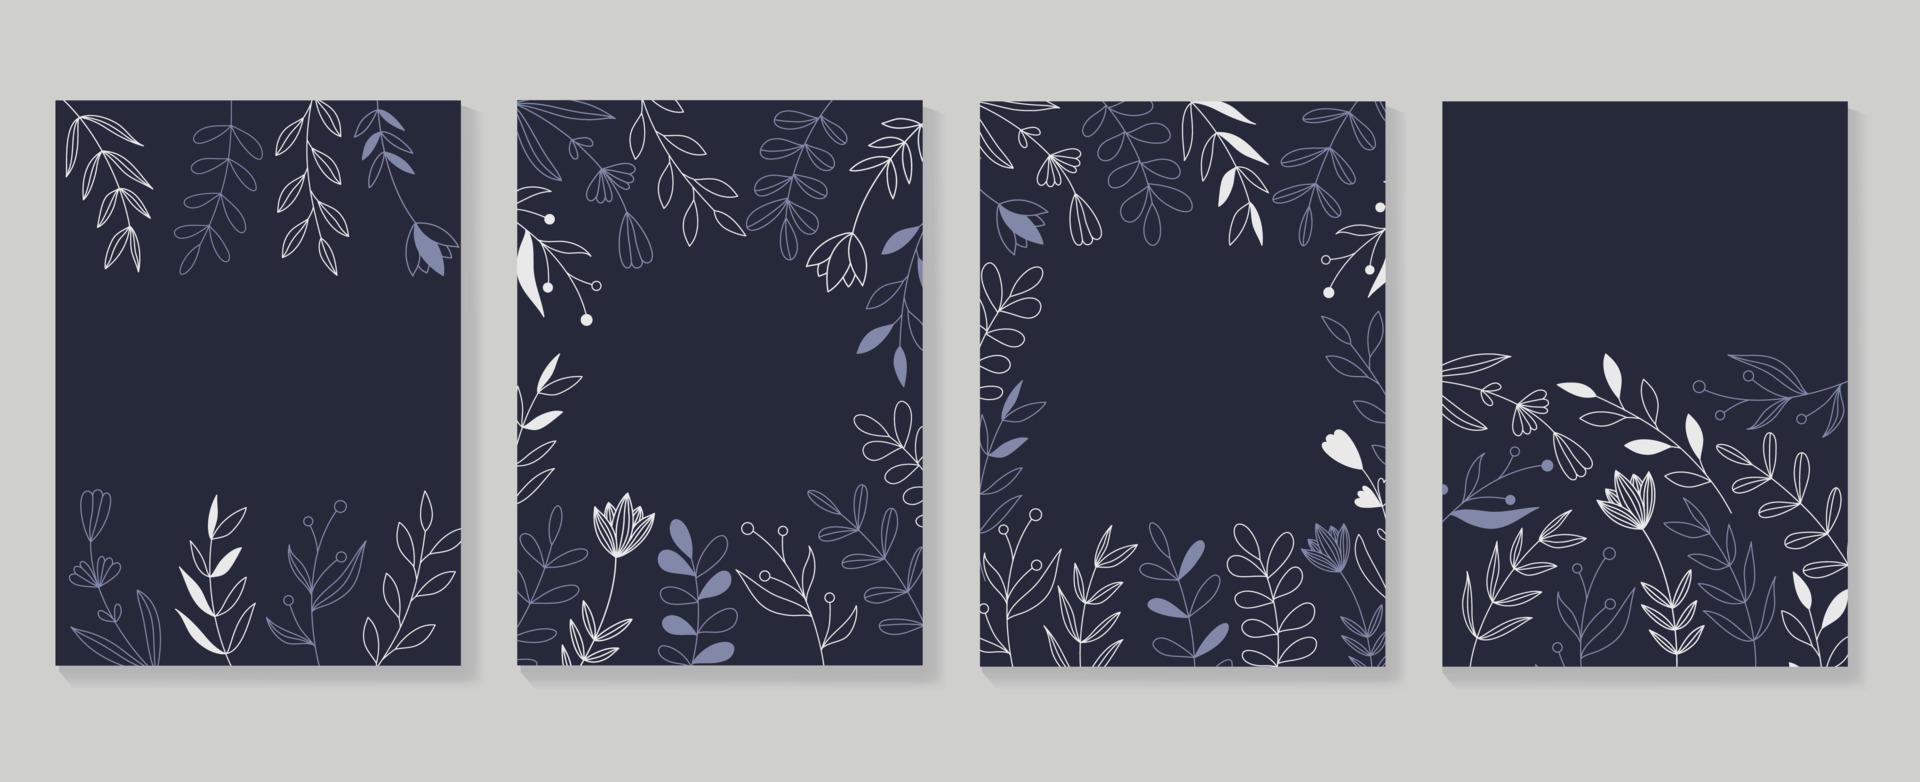 Happy holiday cover template vector set. Botanical floral leaf branch line art frame on dark blue background. Design illustration for invitation card, corporate, greeting, wallpaper, banner, poster.